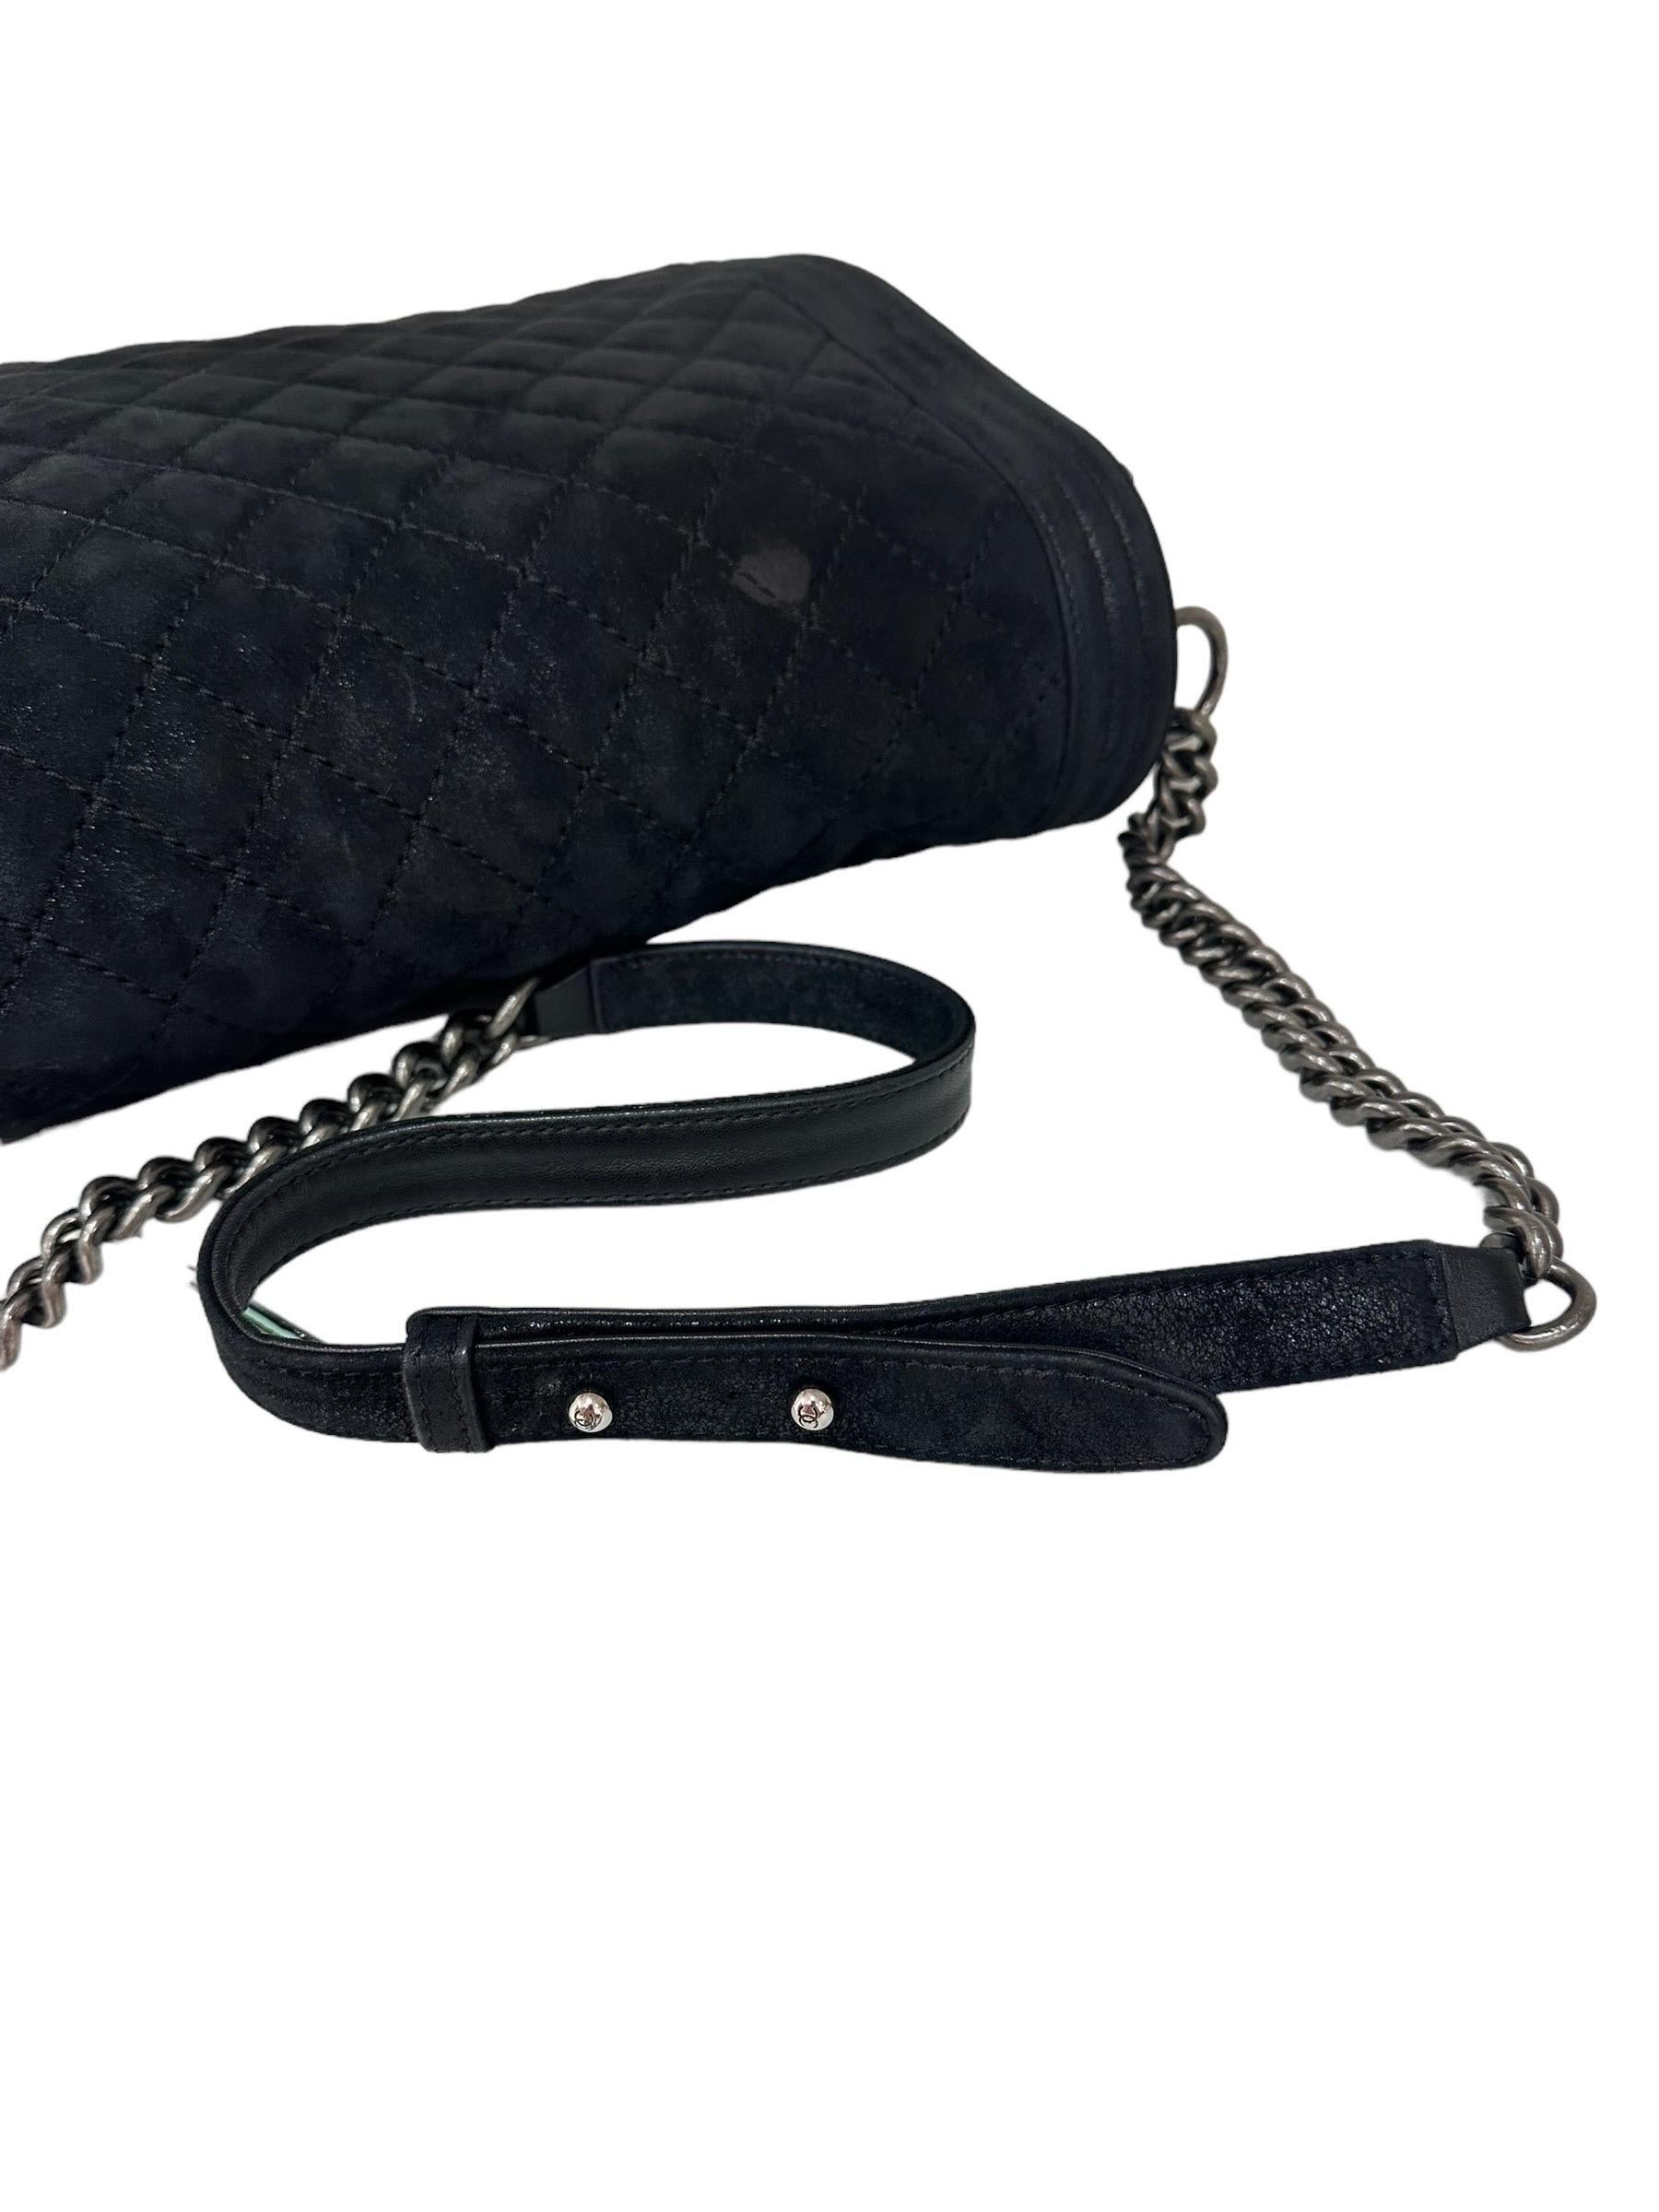 2014 Chanel Boy XL Scamosciato Lurex Nera Borsa a Tracolla  For Sale 9